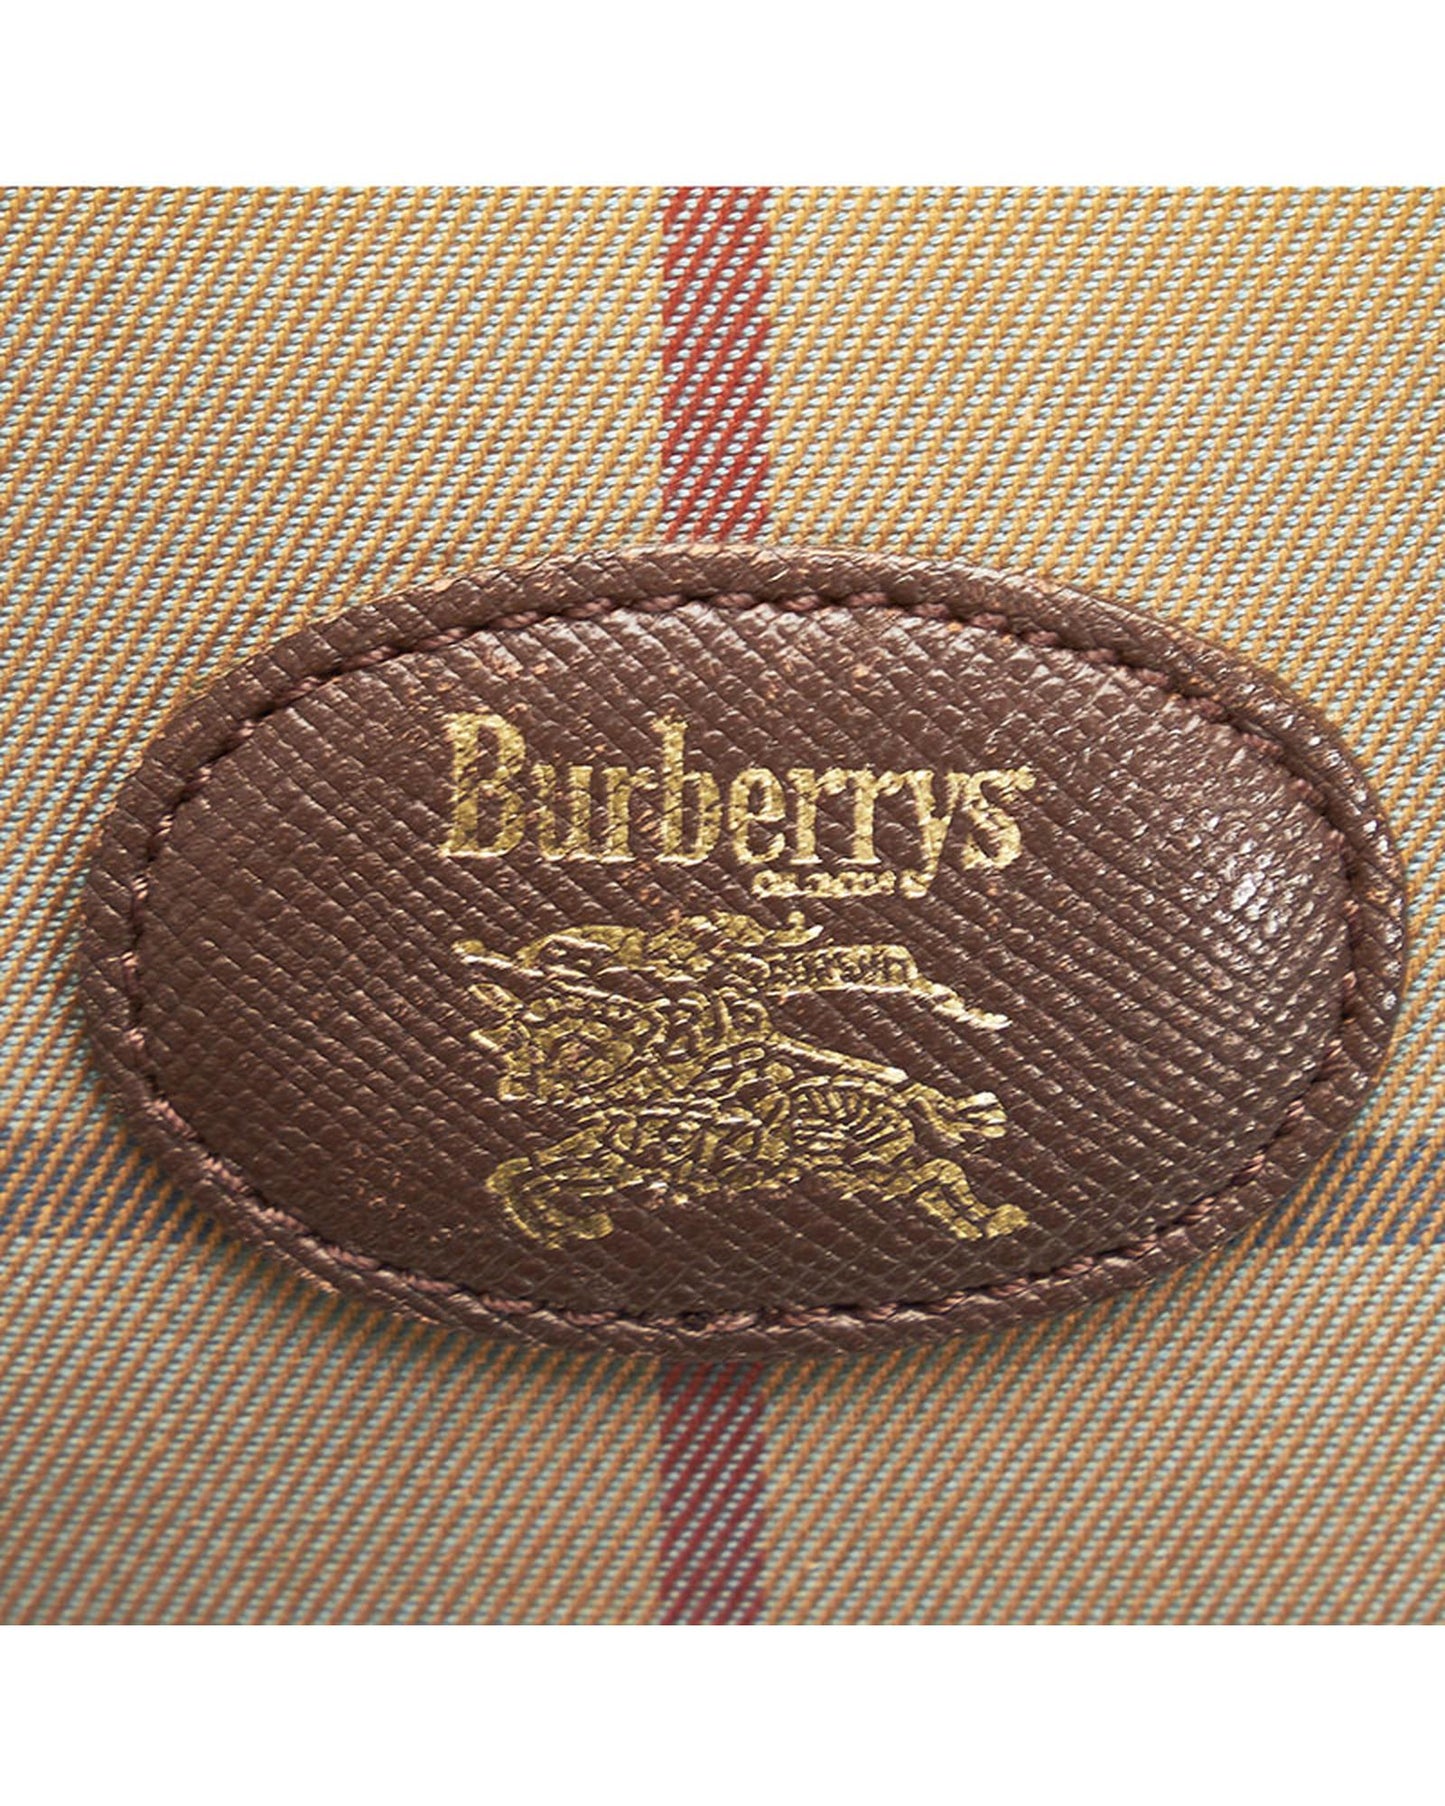 Burberry Women's Bronze Burberry Plaid Canvas Handbag - A Condition in Bronze